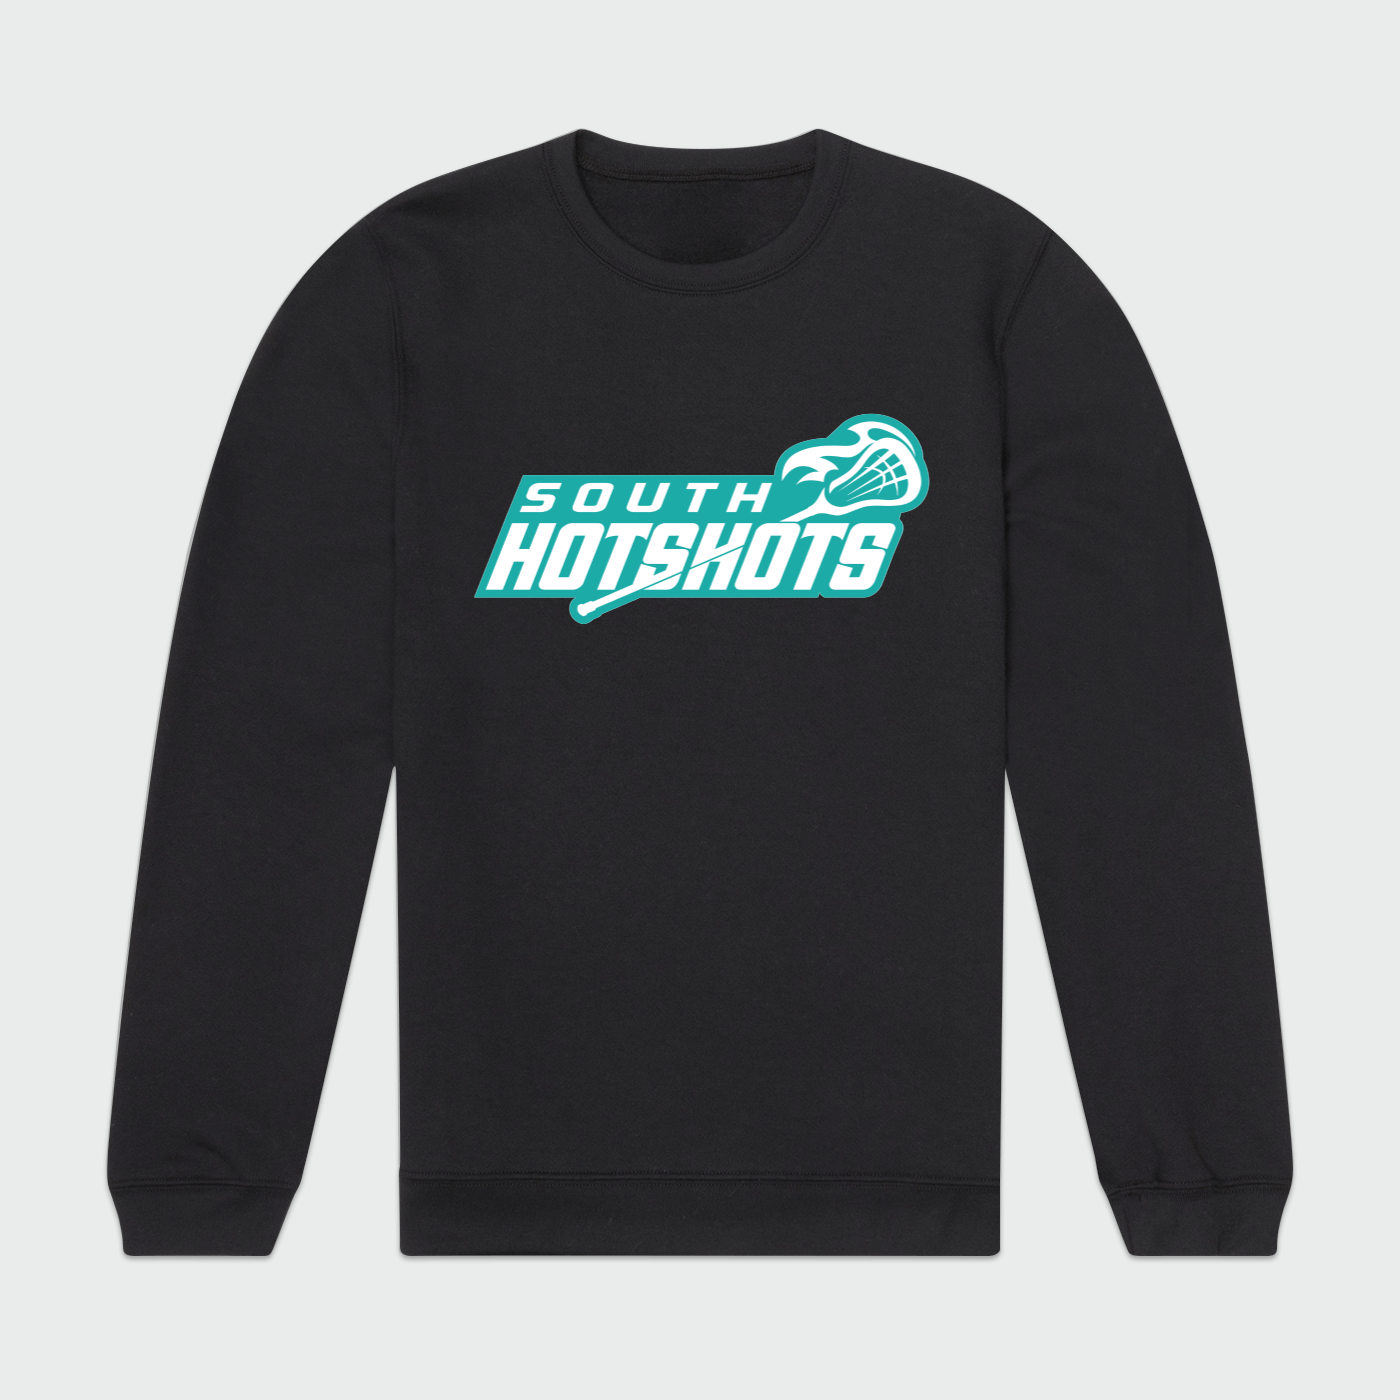 South Hotshots Lacrosse Adult Sport Sweatshirt Signature Lacrosse